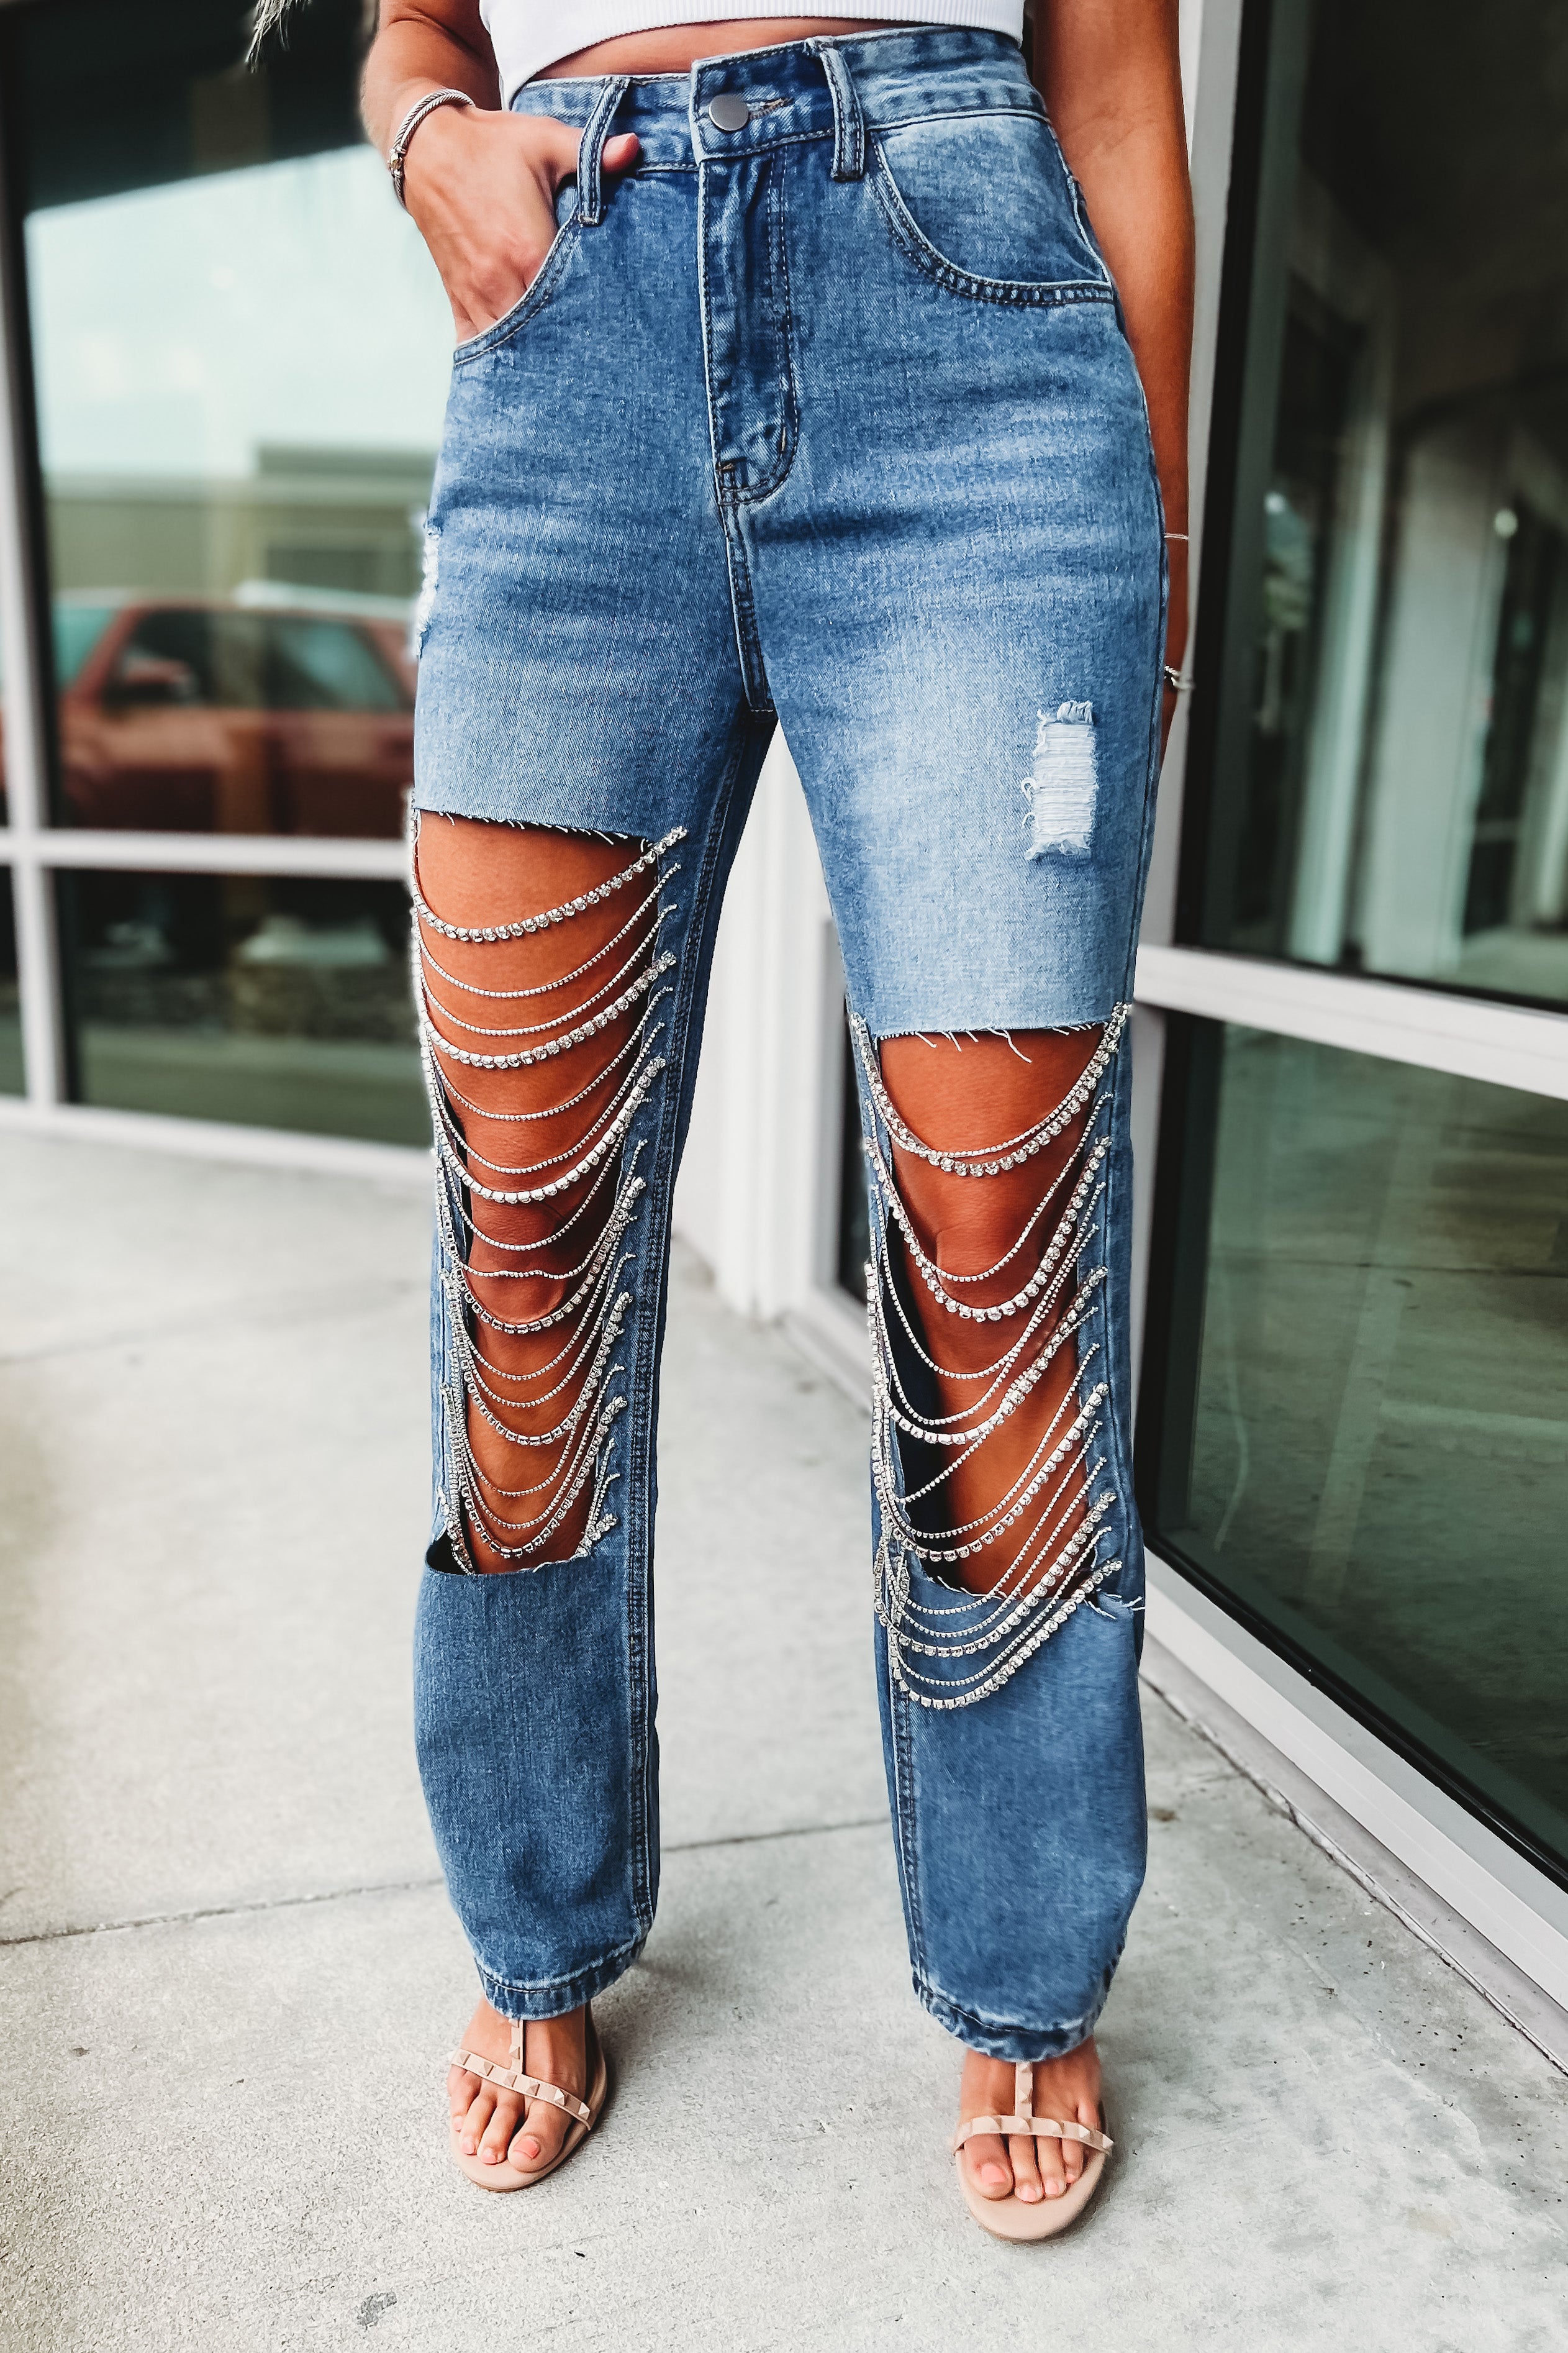 Rhinestone jeans